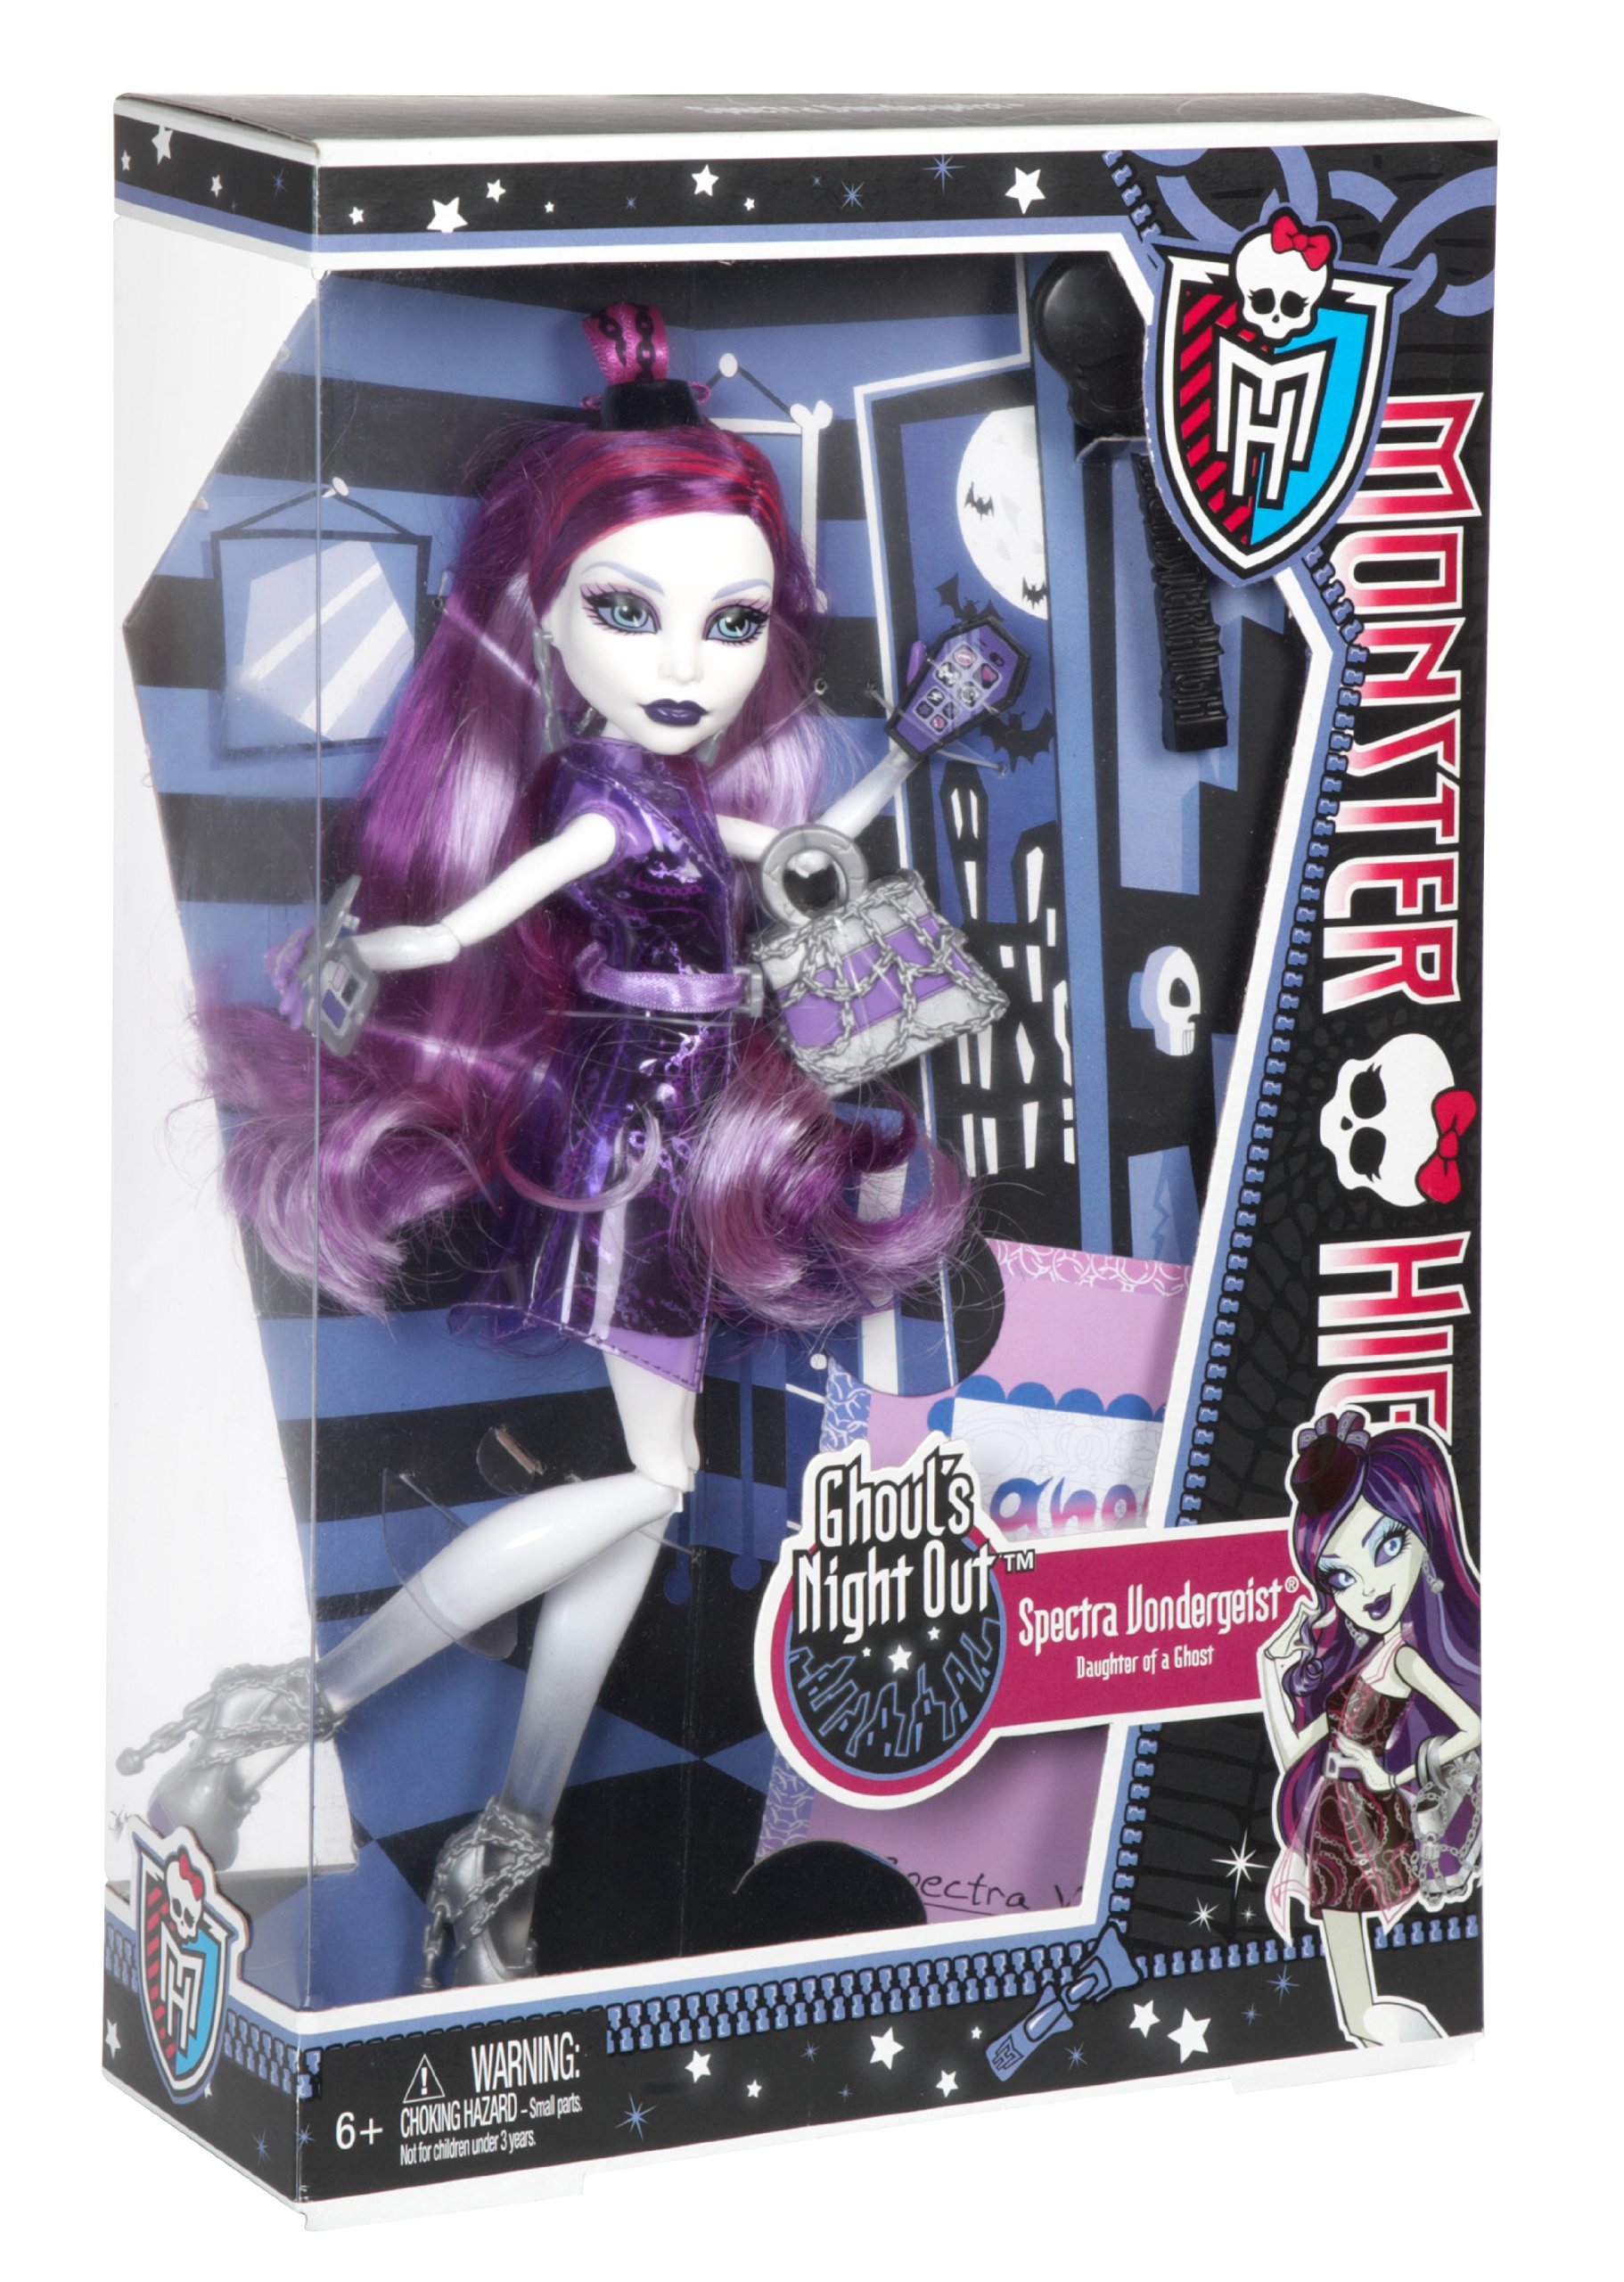 Monster High Ghouls Night Out Spectra Vondergeist Doll